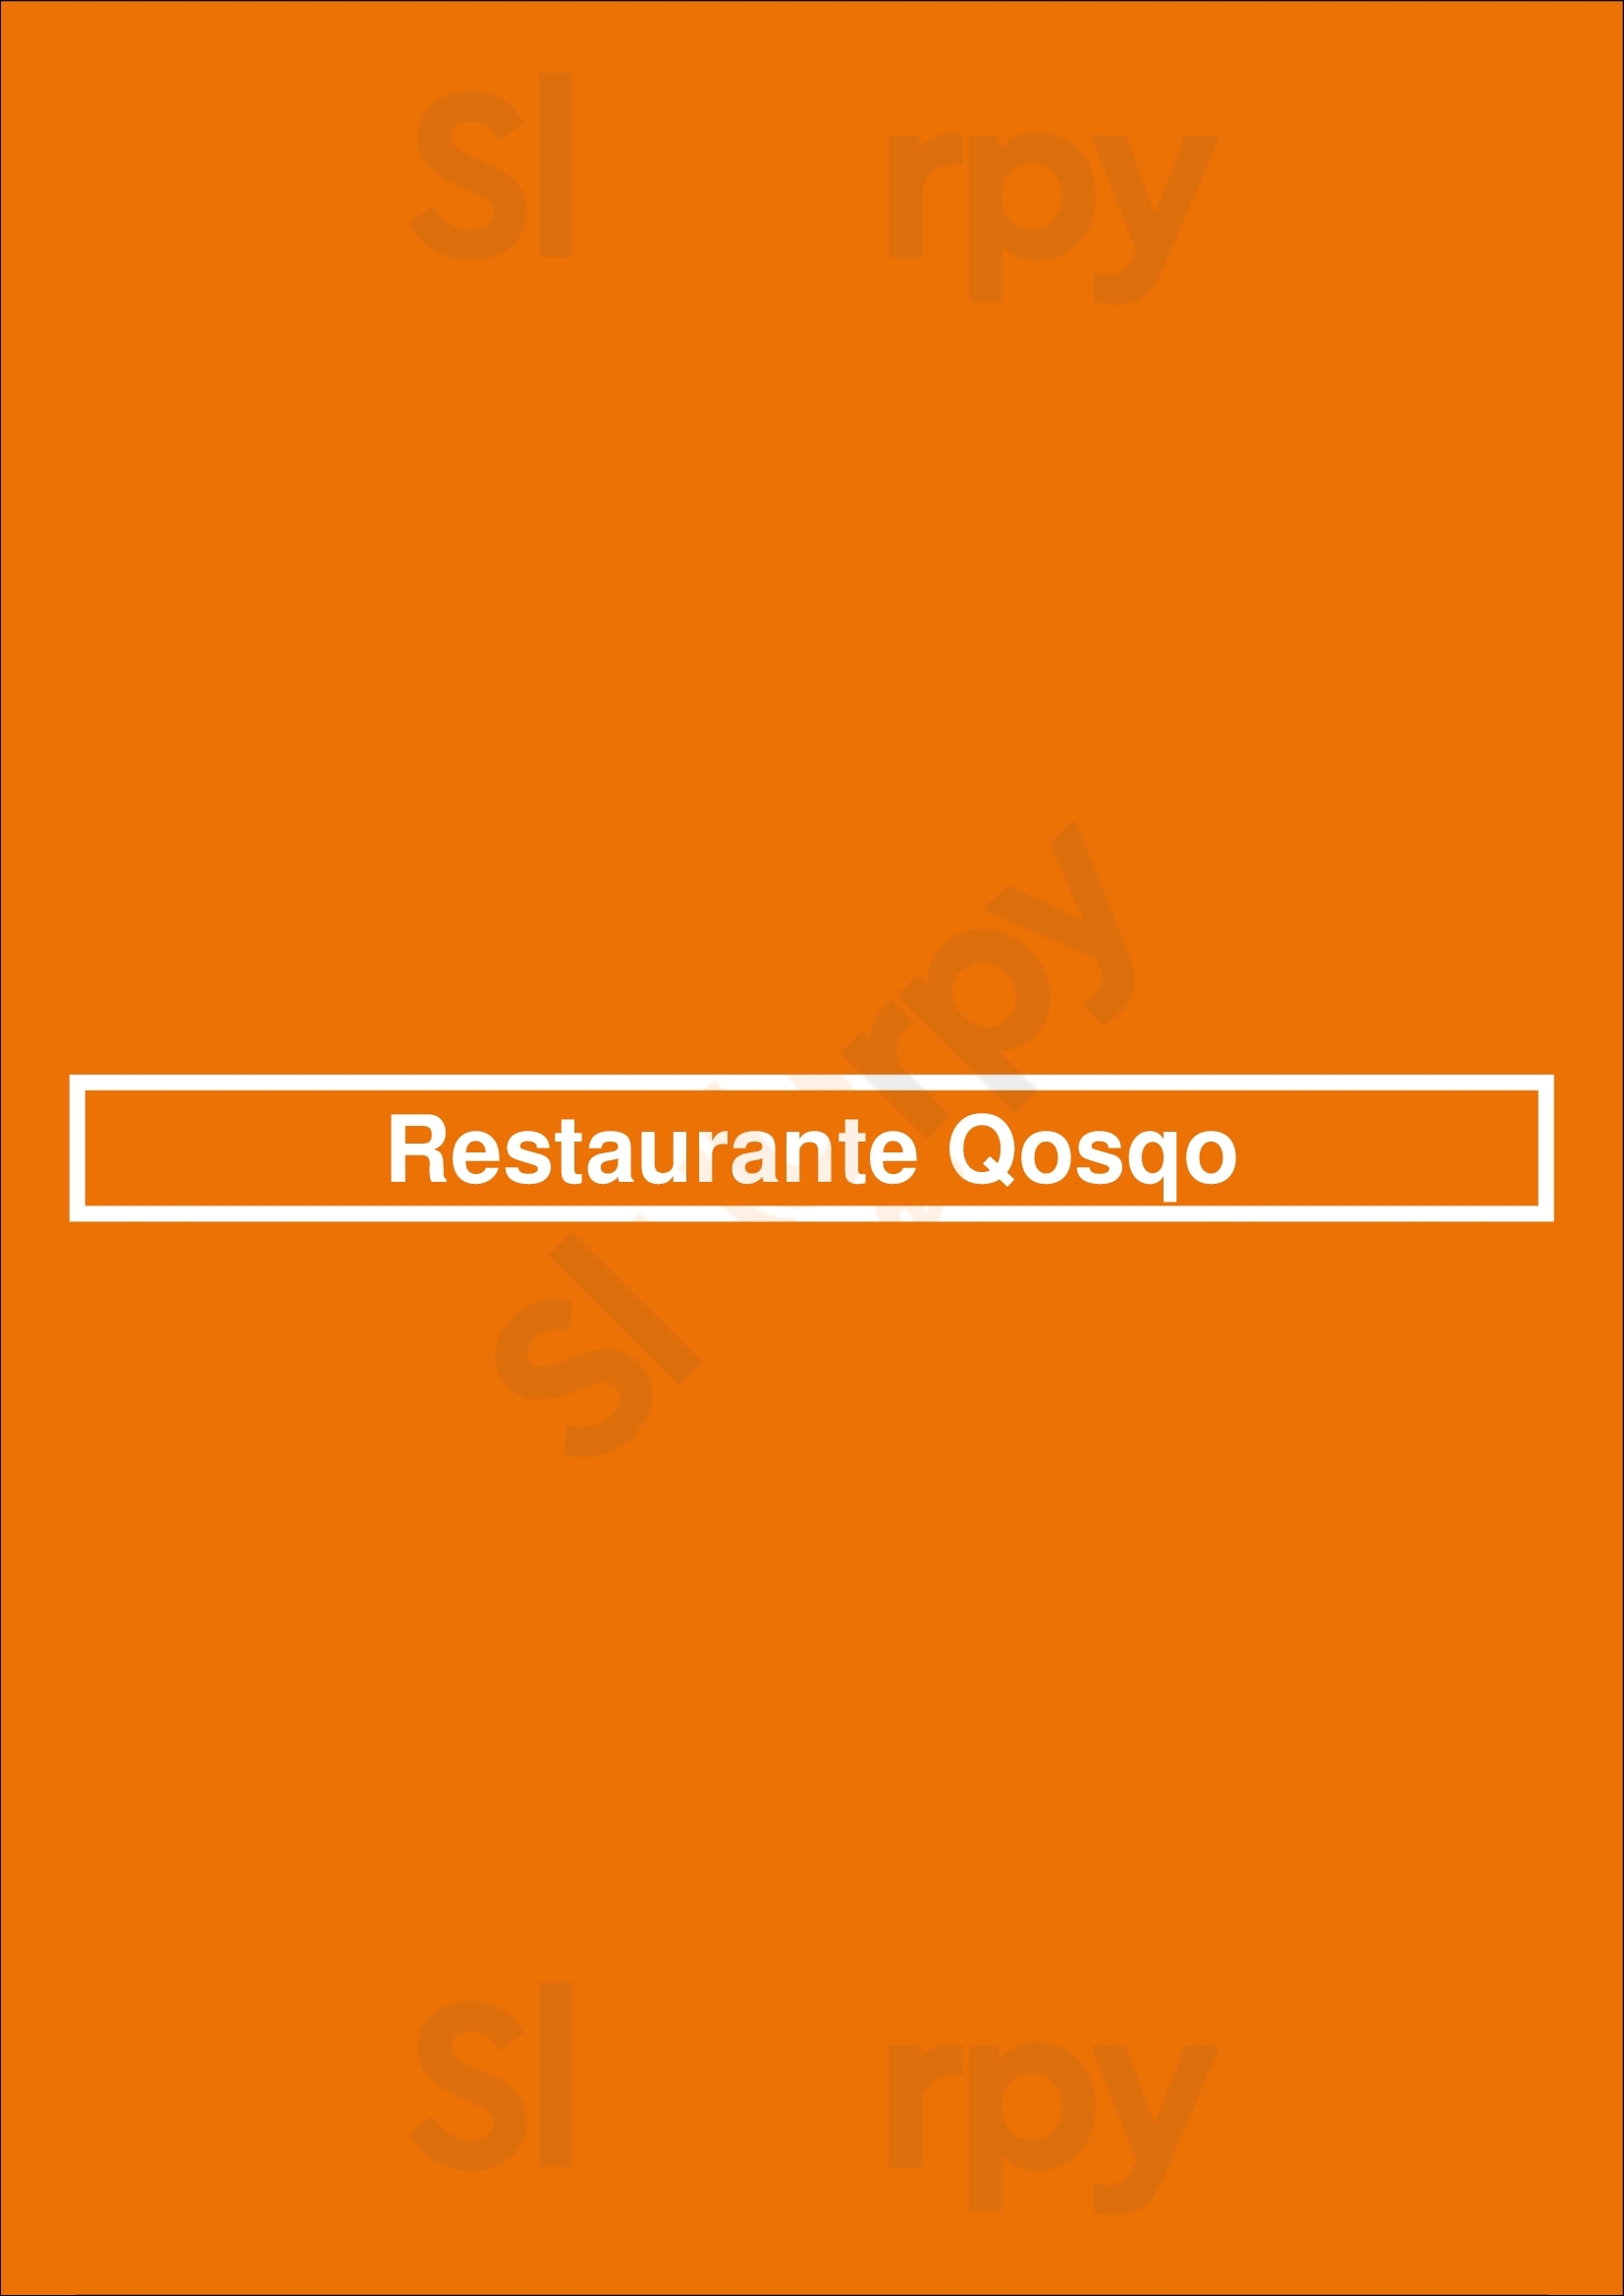 Restaurante Qosqo Lisboa Menu - 1